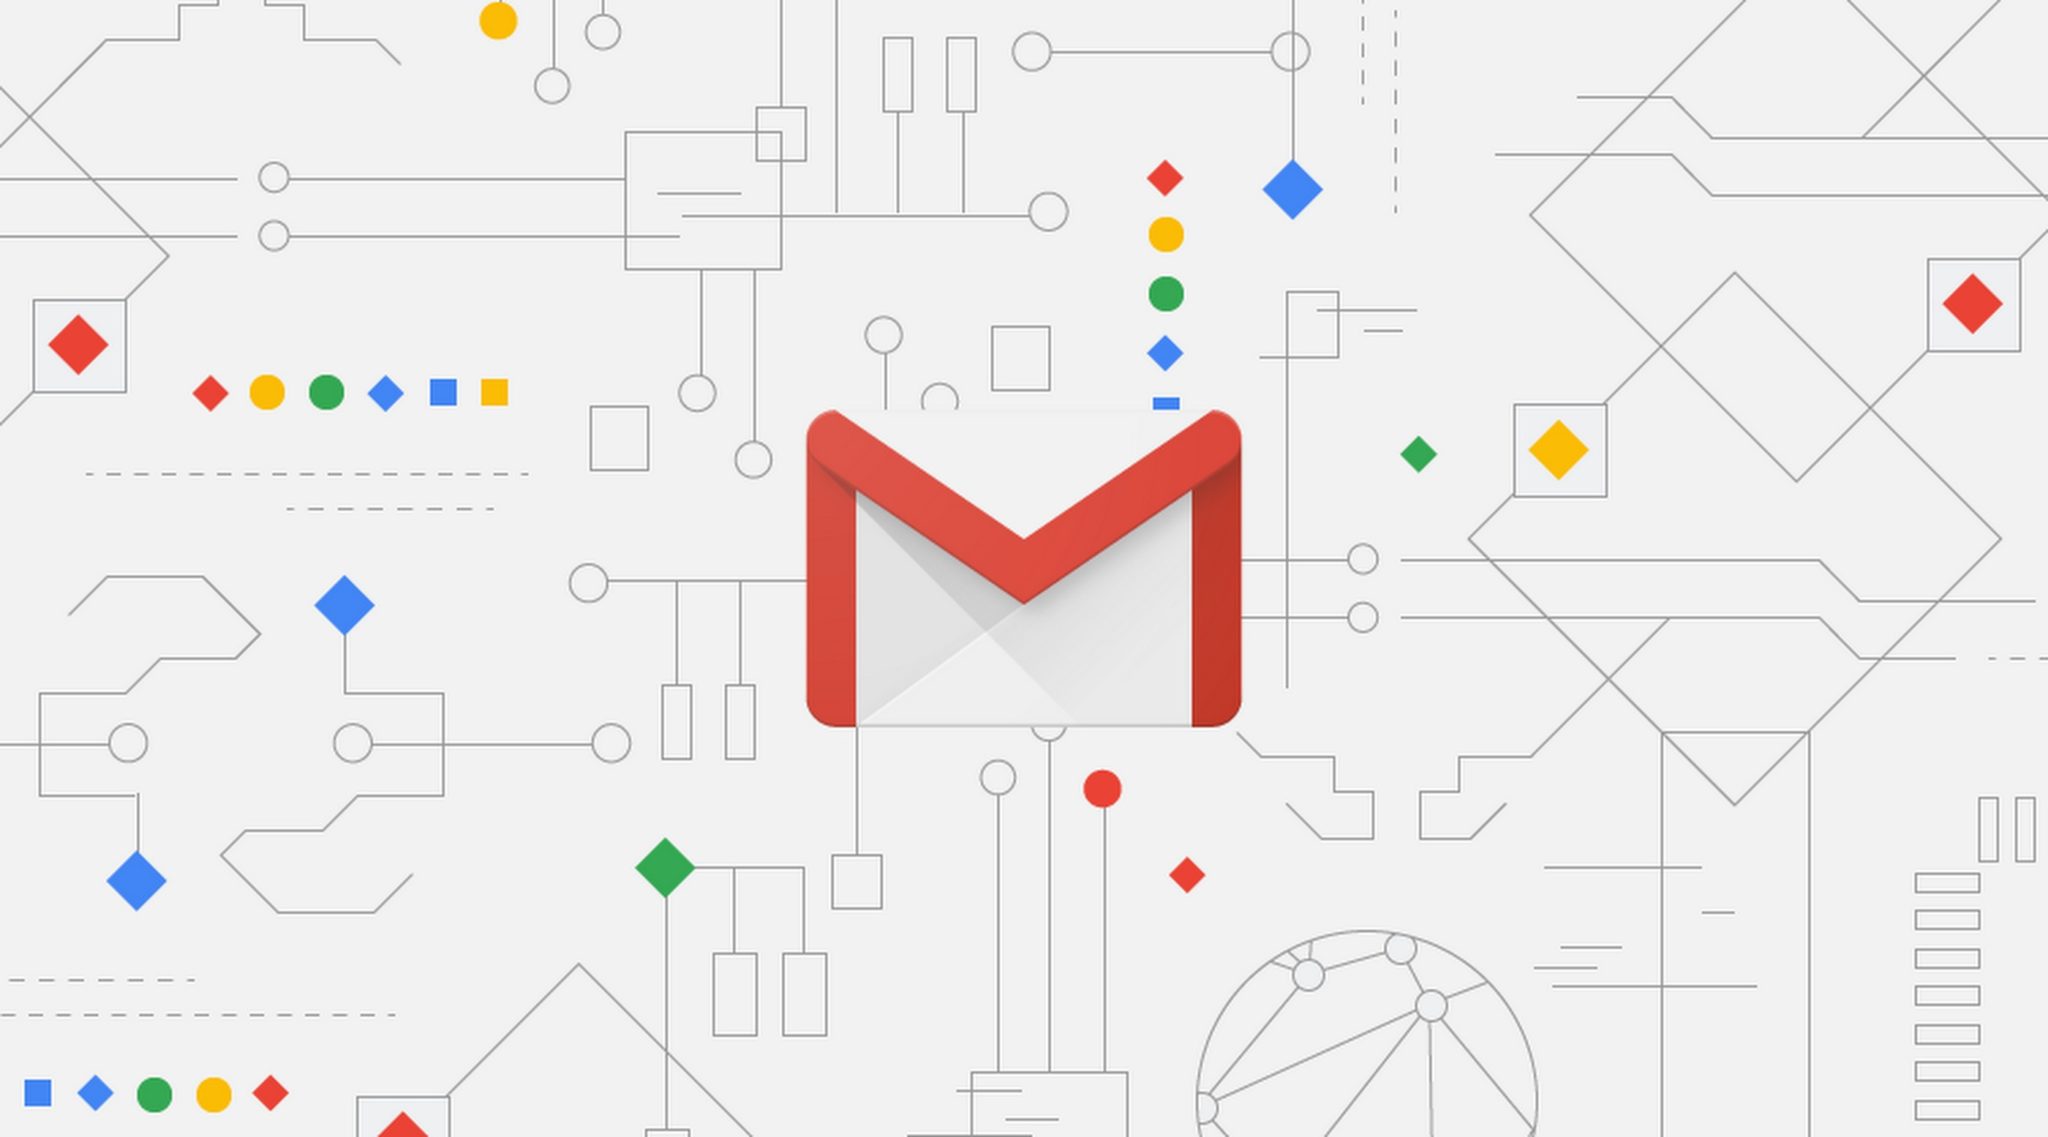 new gmail interface